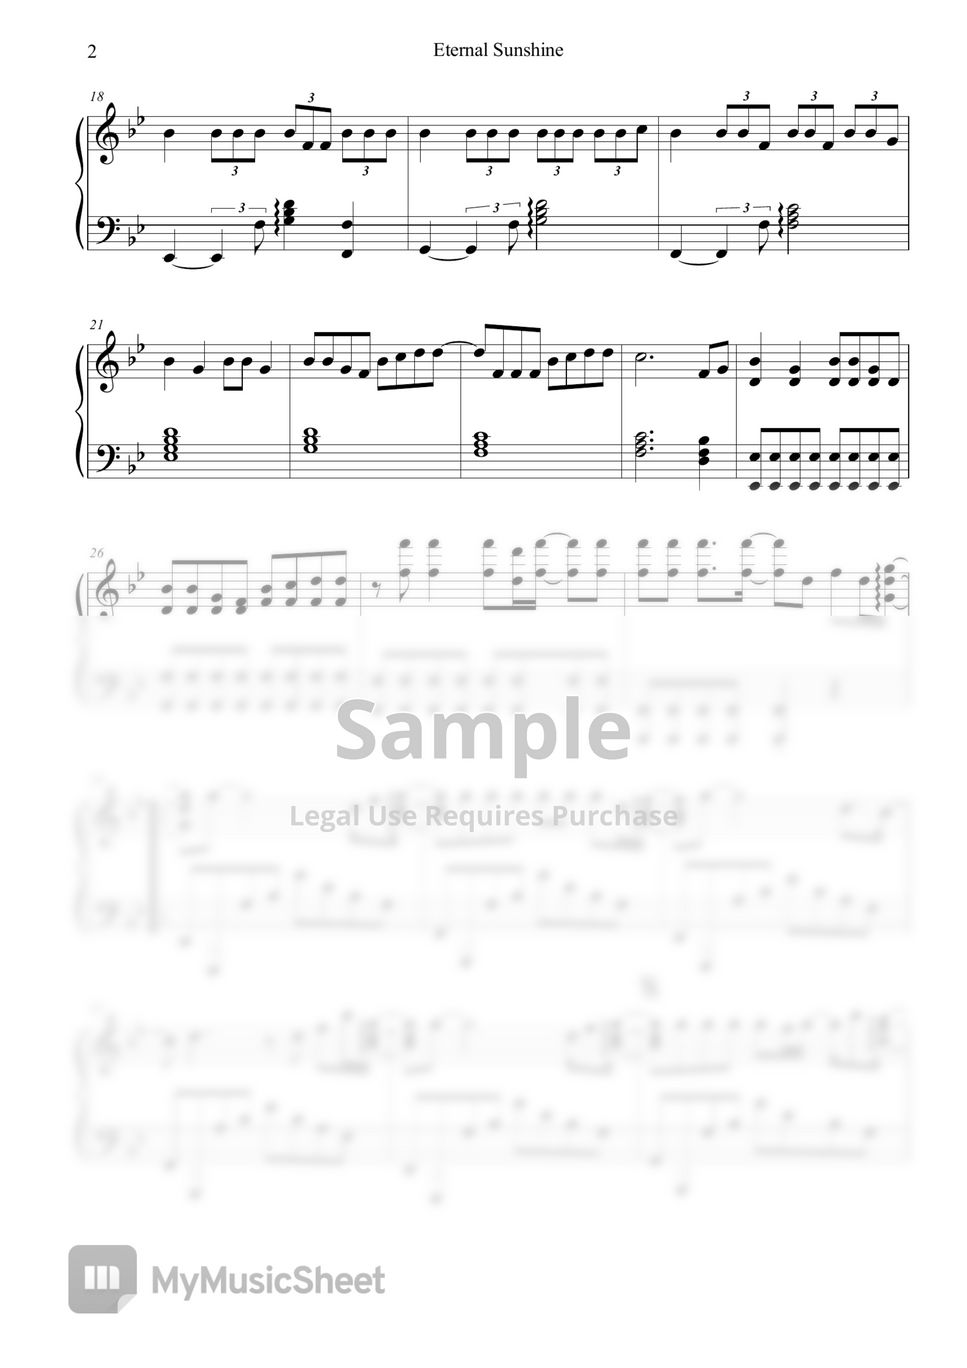 ATEEZ - Eternal Sunshine by Lunar Piano